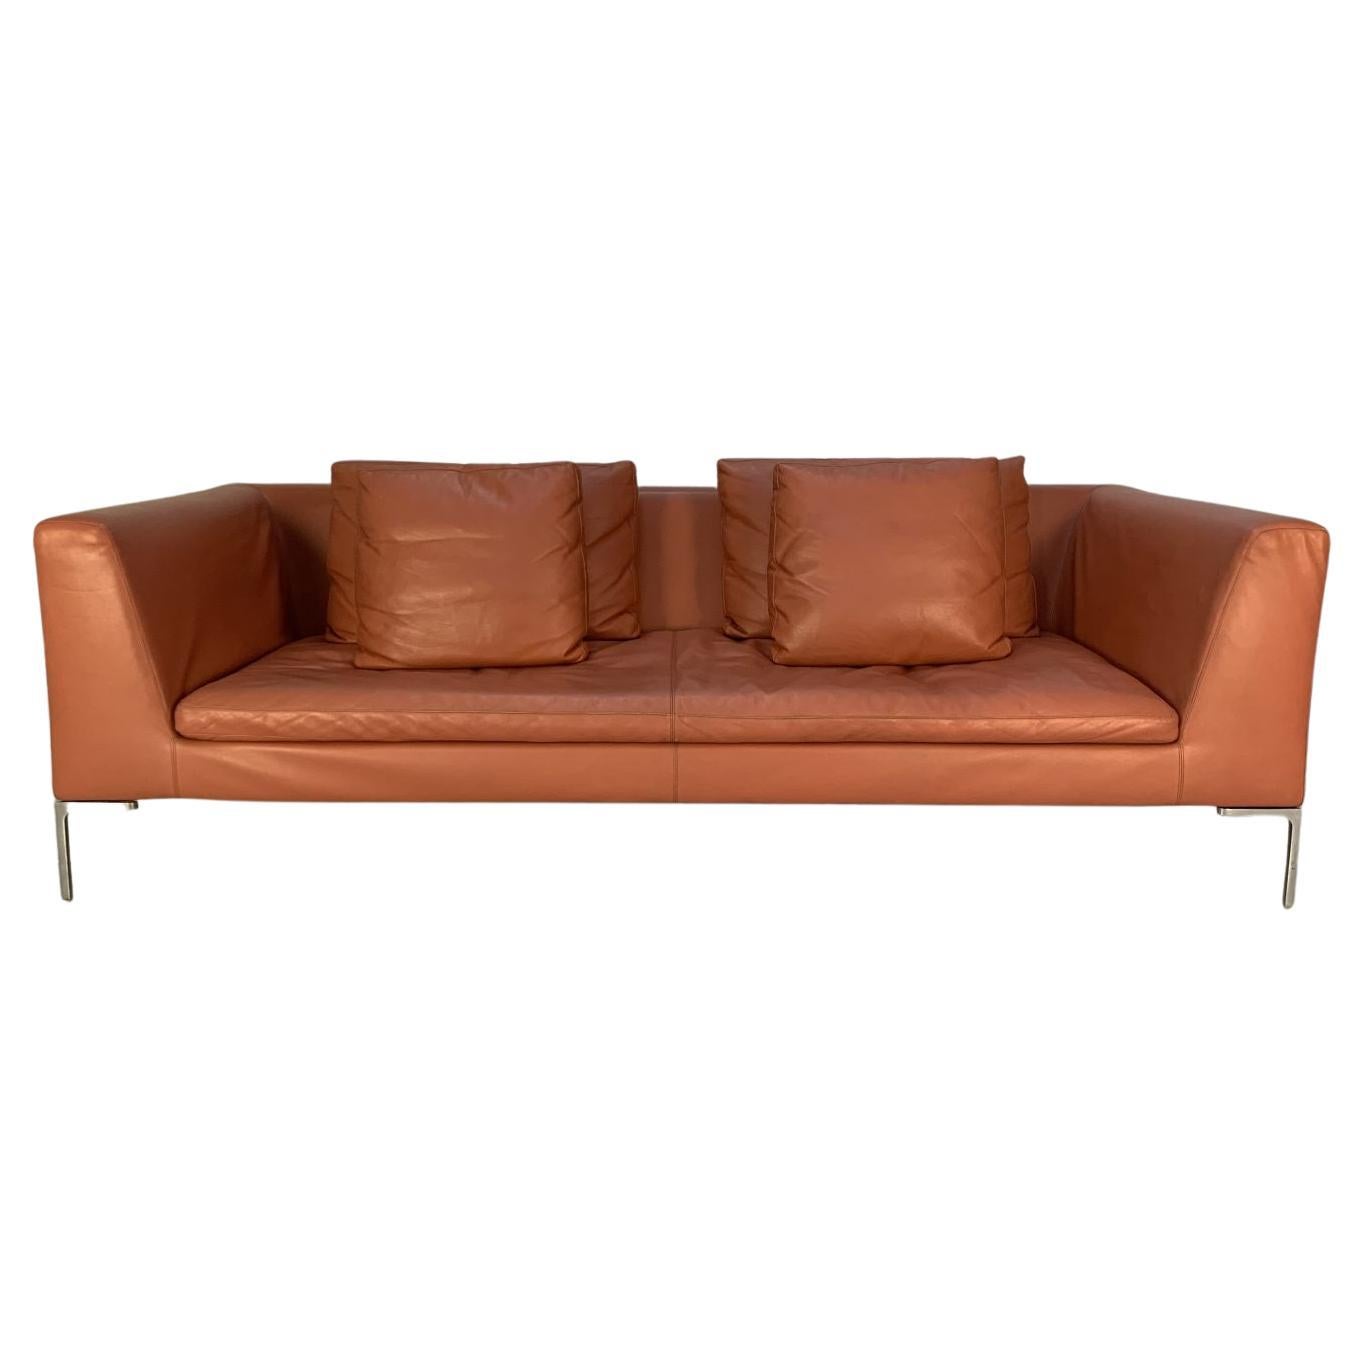 B&B Italia “Charles” Sofa – “CH230” 3-Seat – In Dark Pink “Gamma” Leather